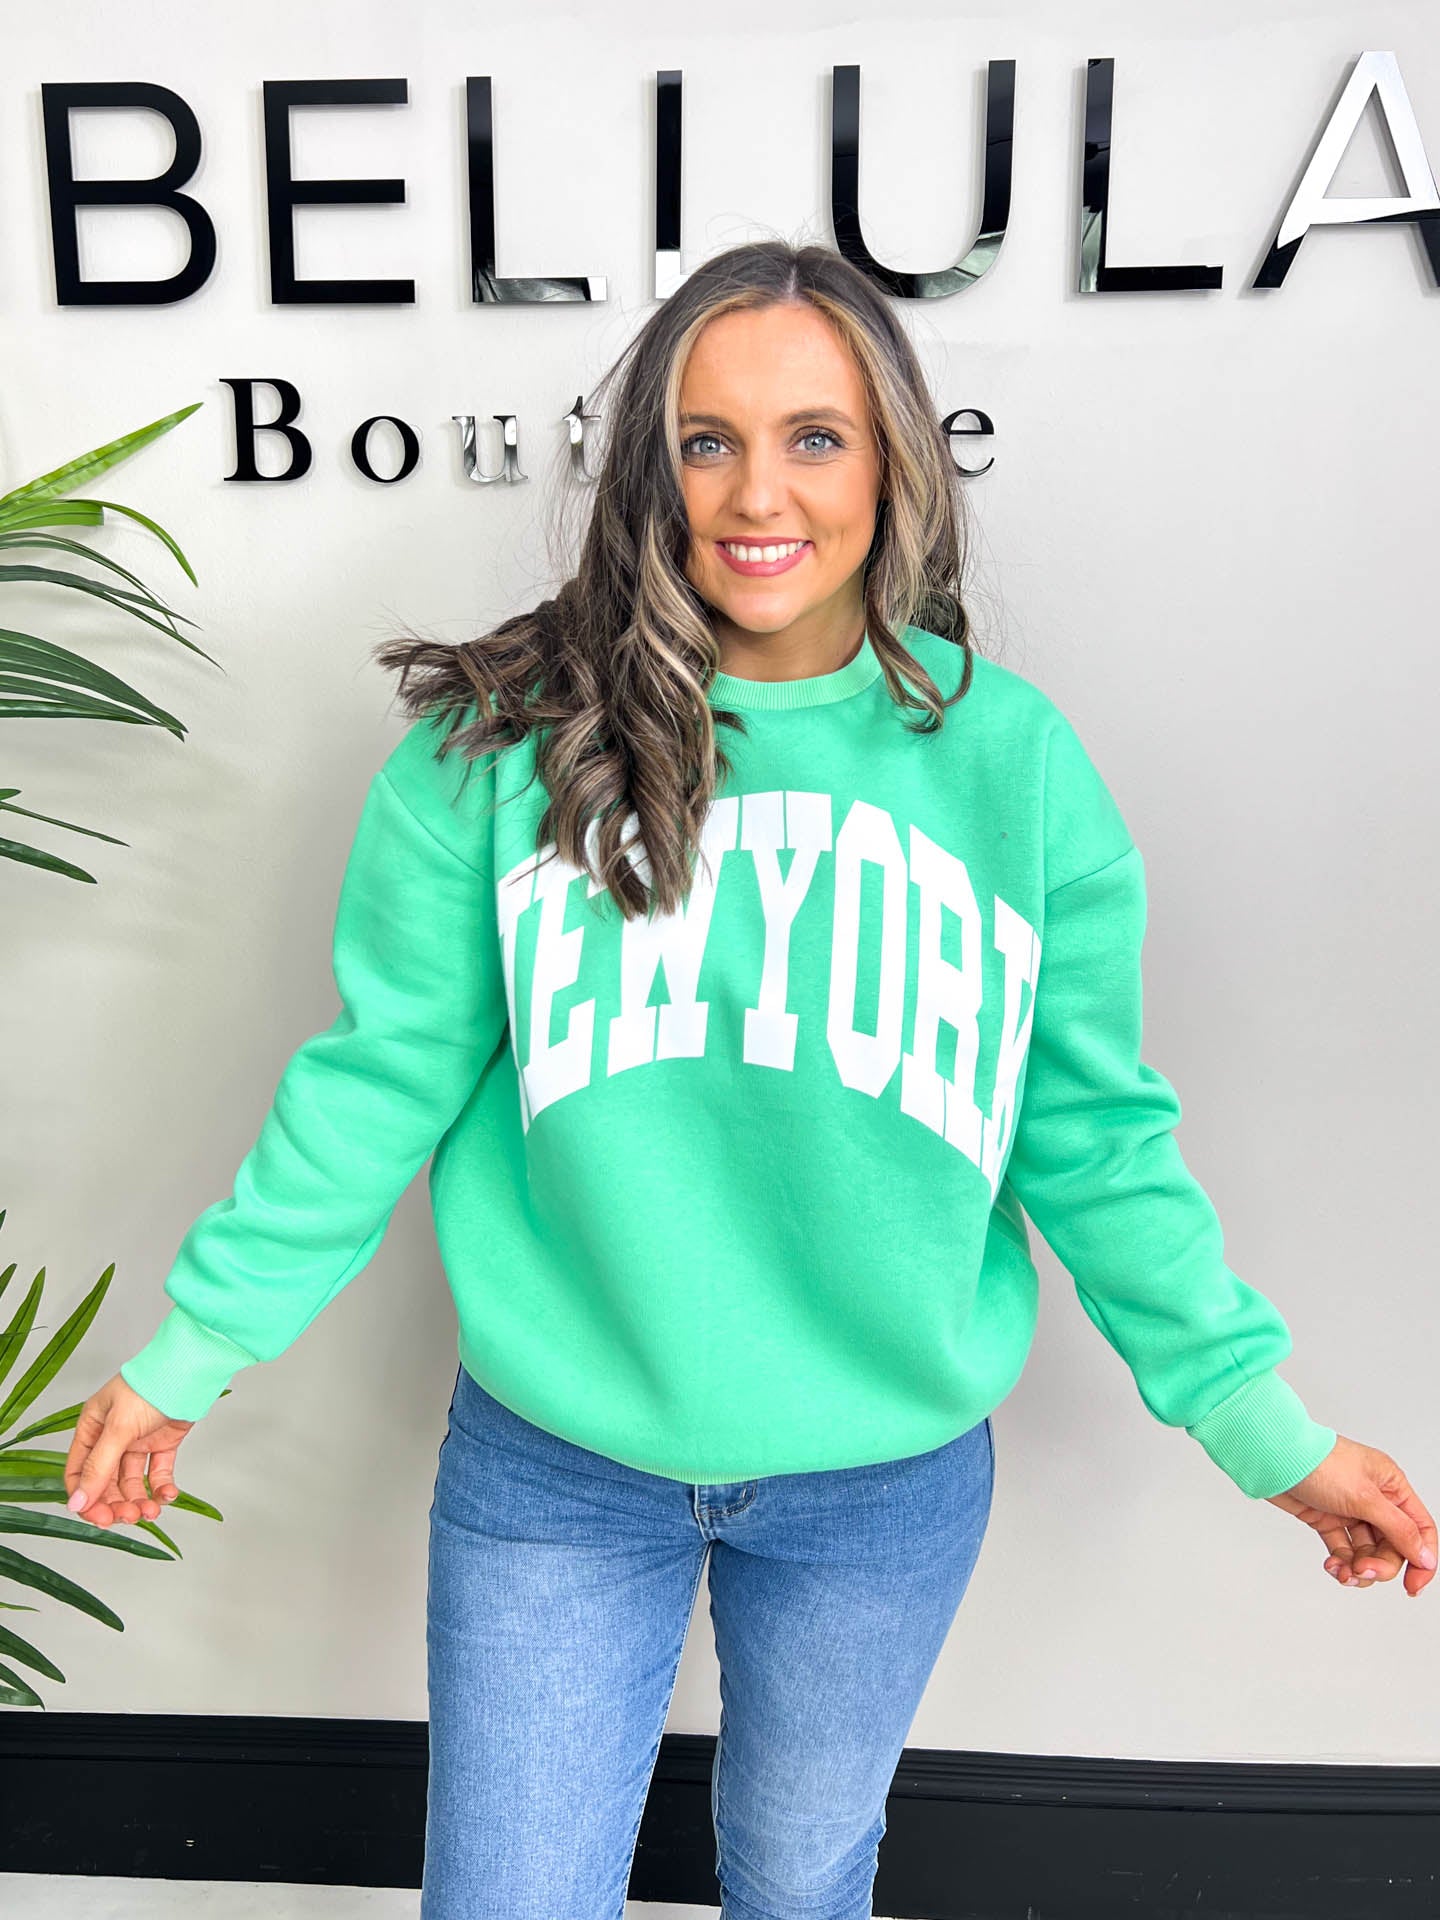 The Alicia - New York Sweatshirt